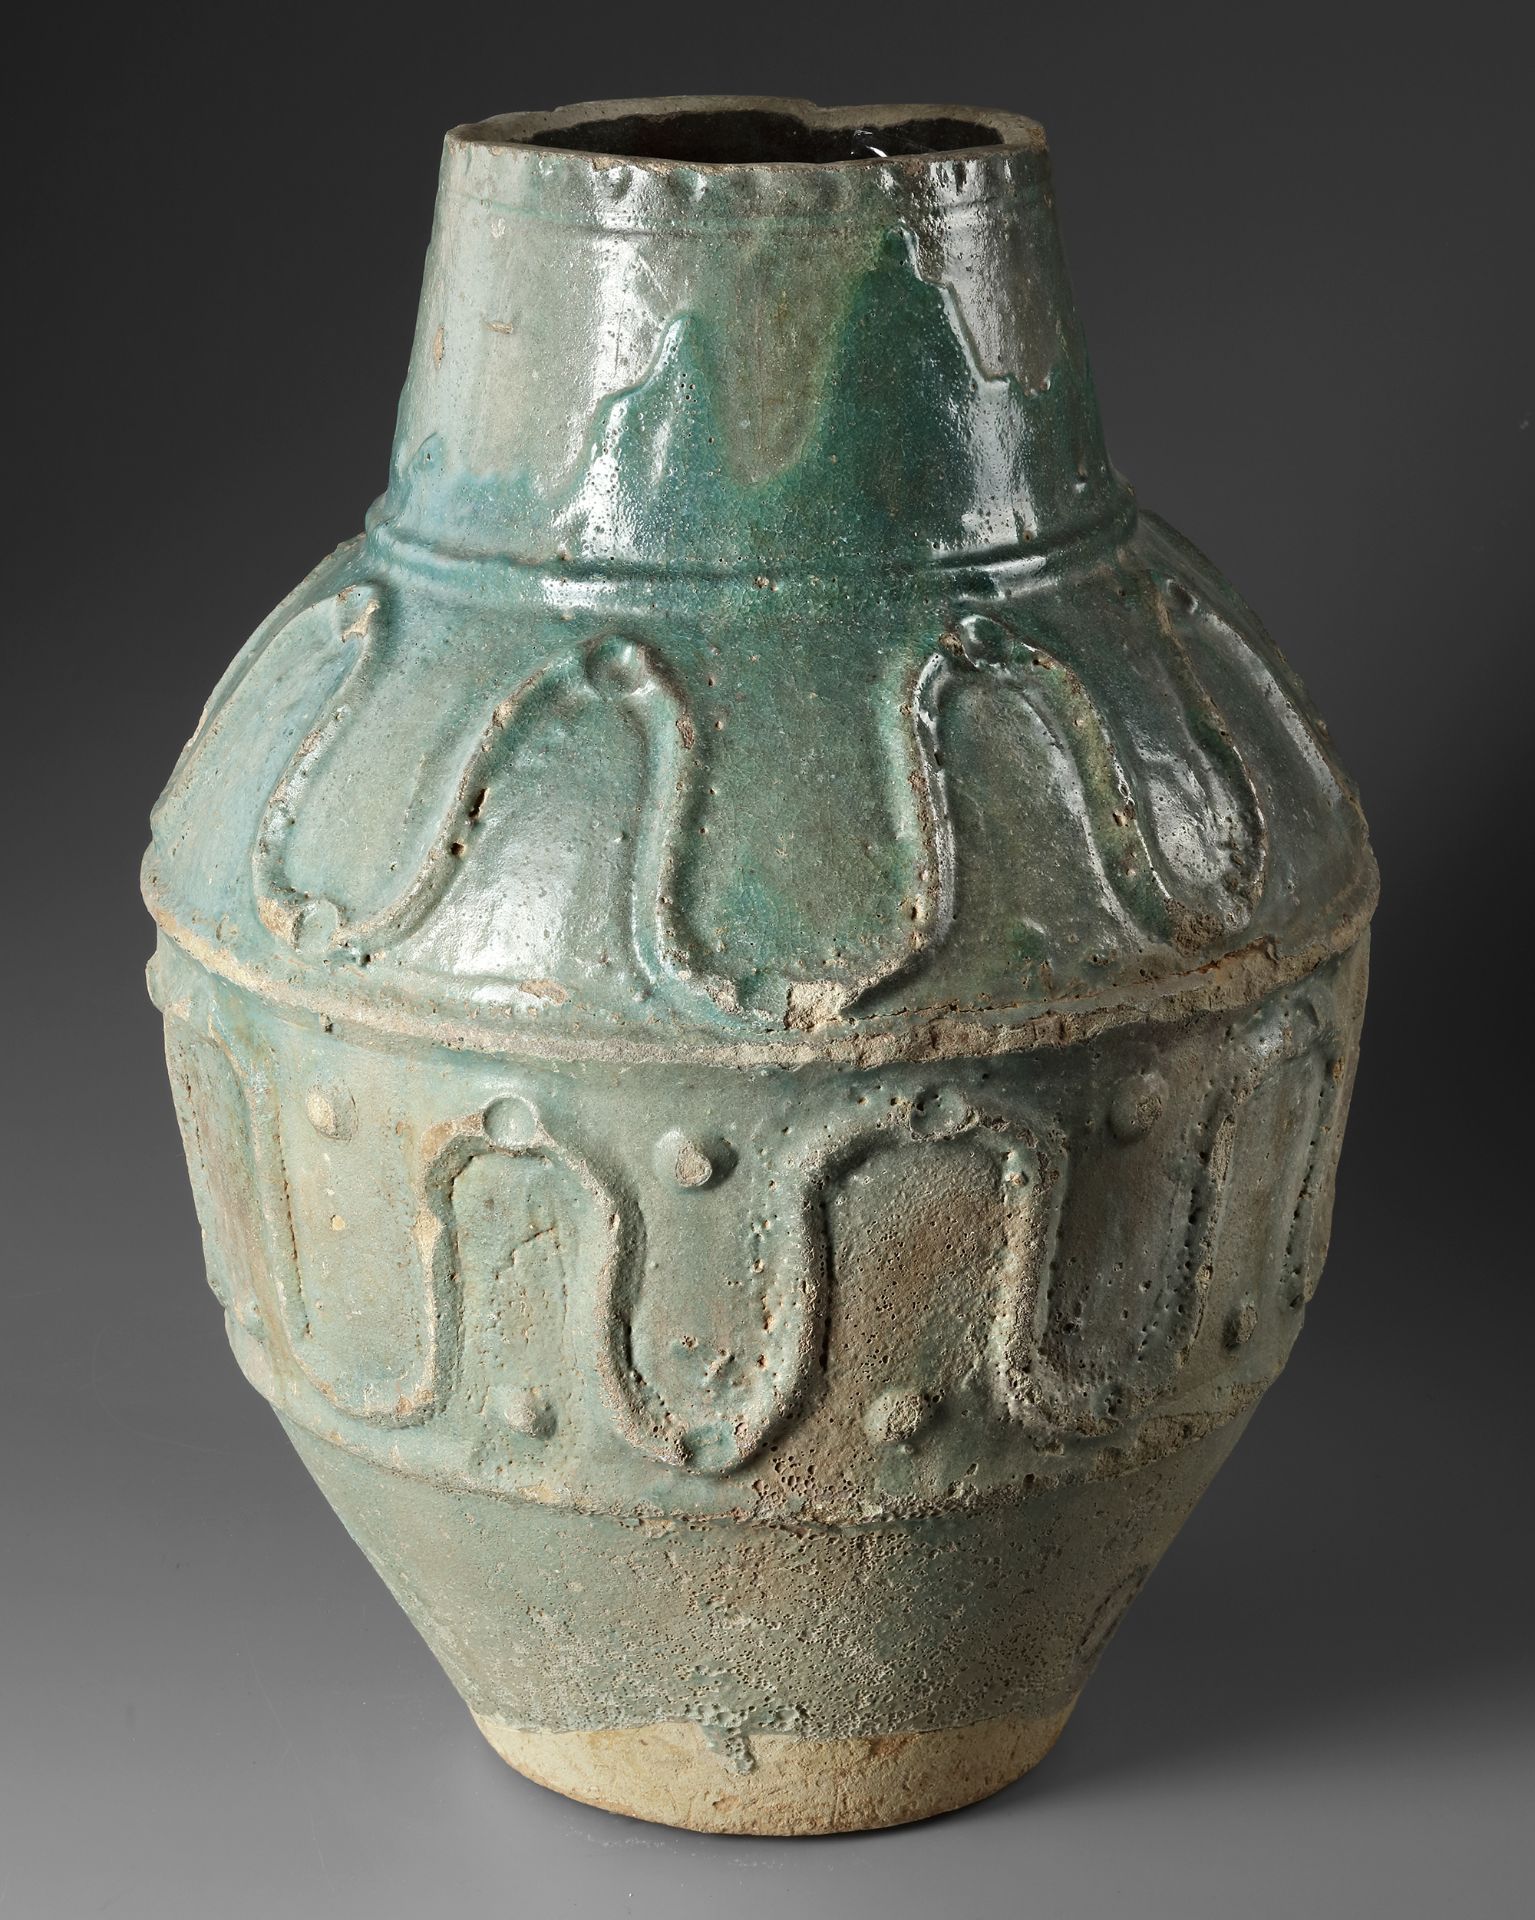 A LARGE POST-SASSANIAN TURQUOISE GLAZED STORAGE JAR, PERSIA, 8TH CENTURY - Image 2 of 3